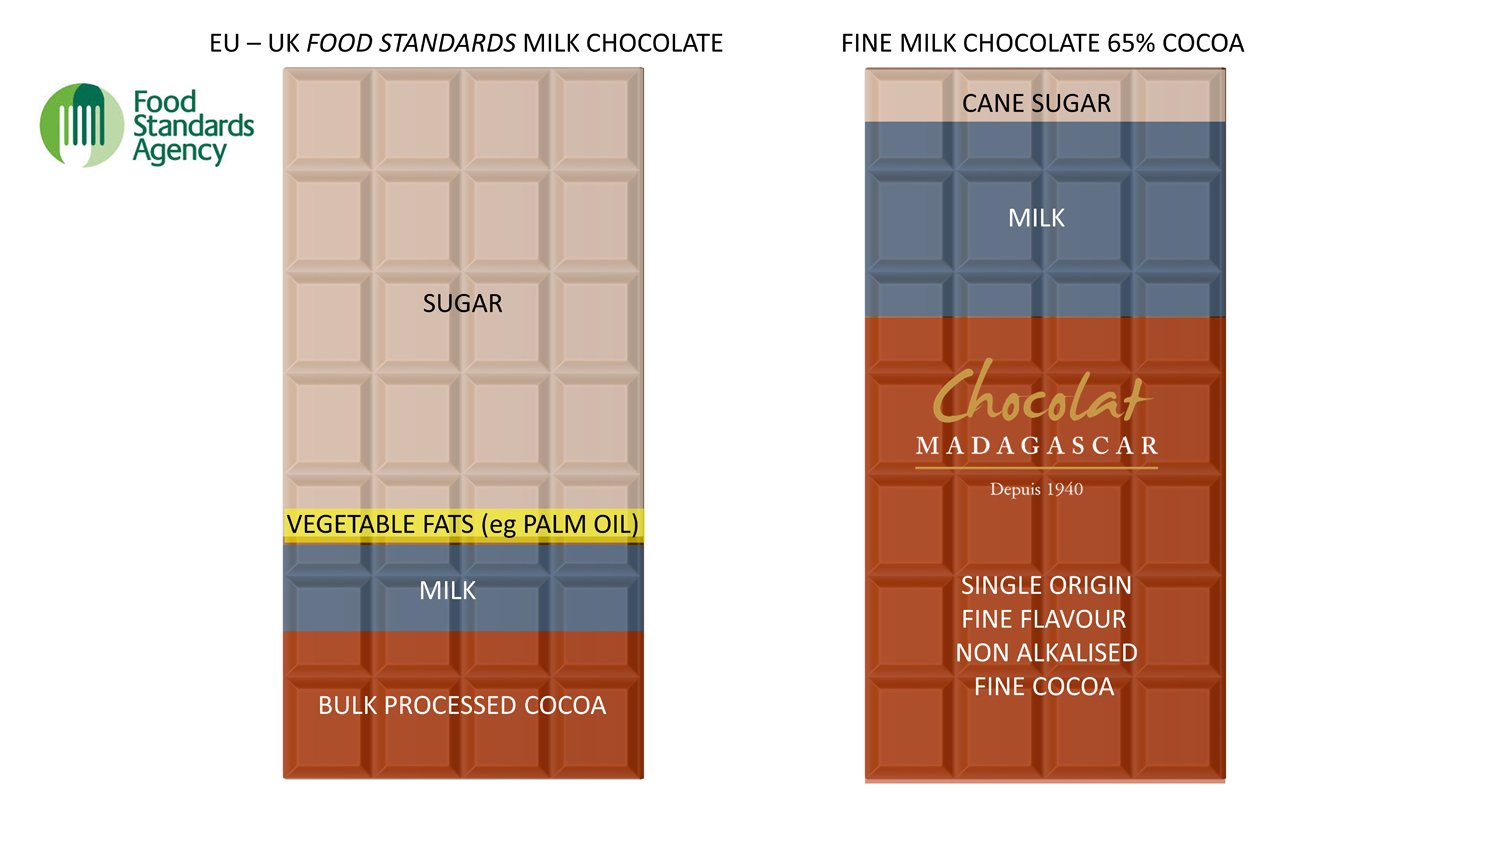 a comparison of sugar content between 65% megamilk & standard industrial milk chocolate